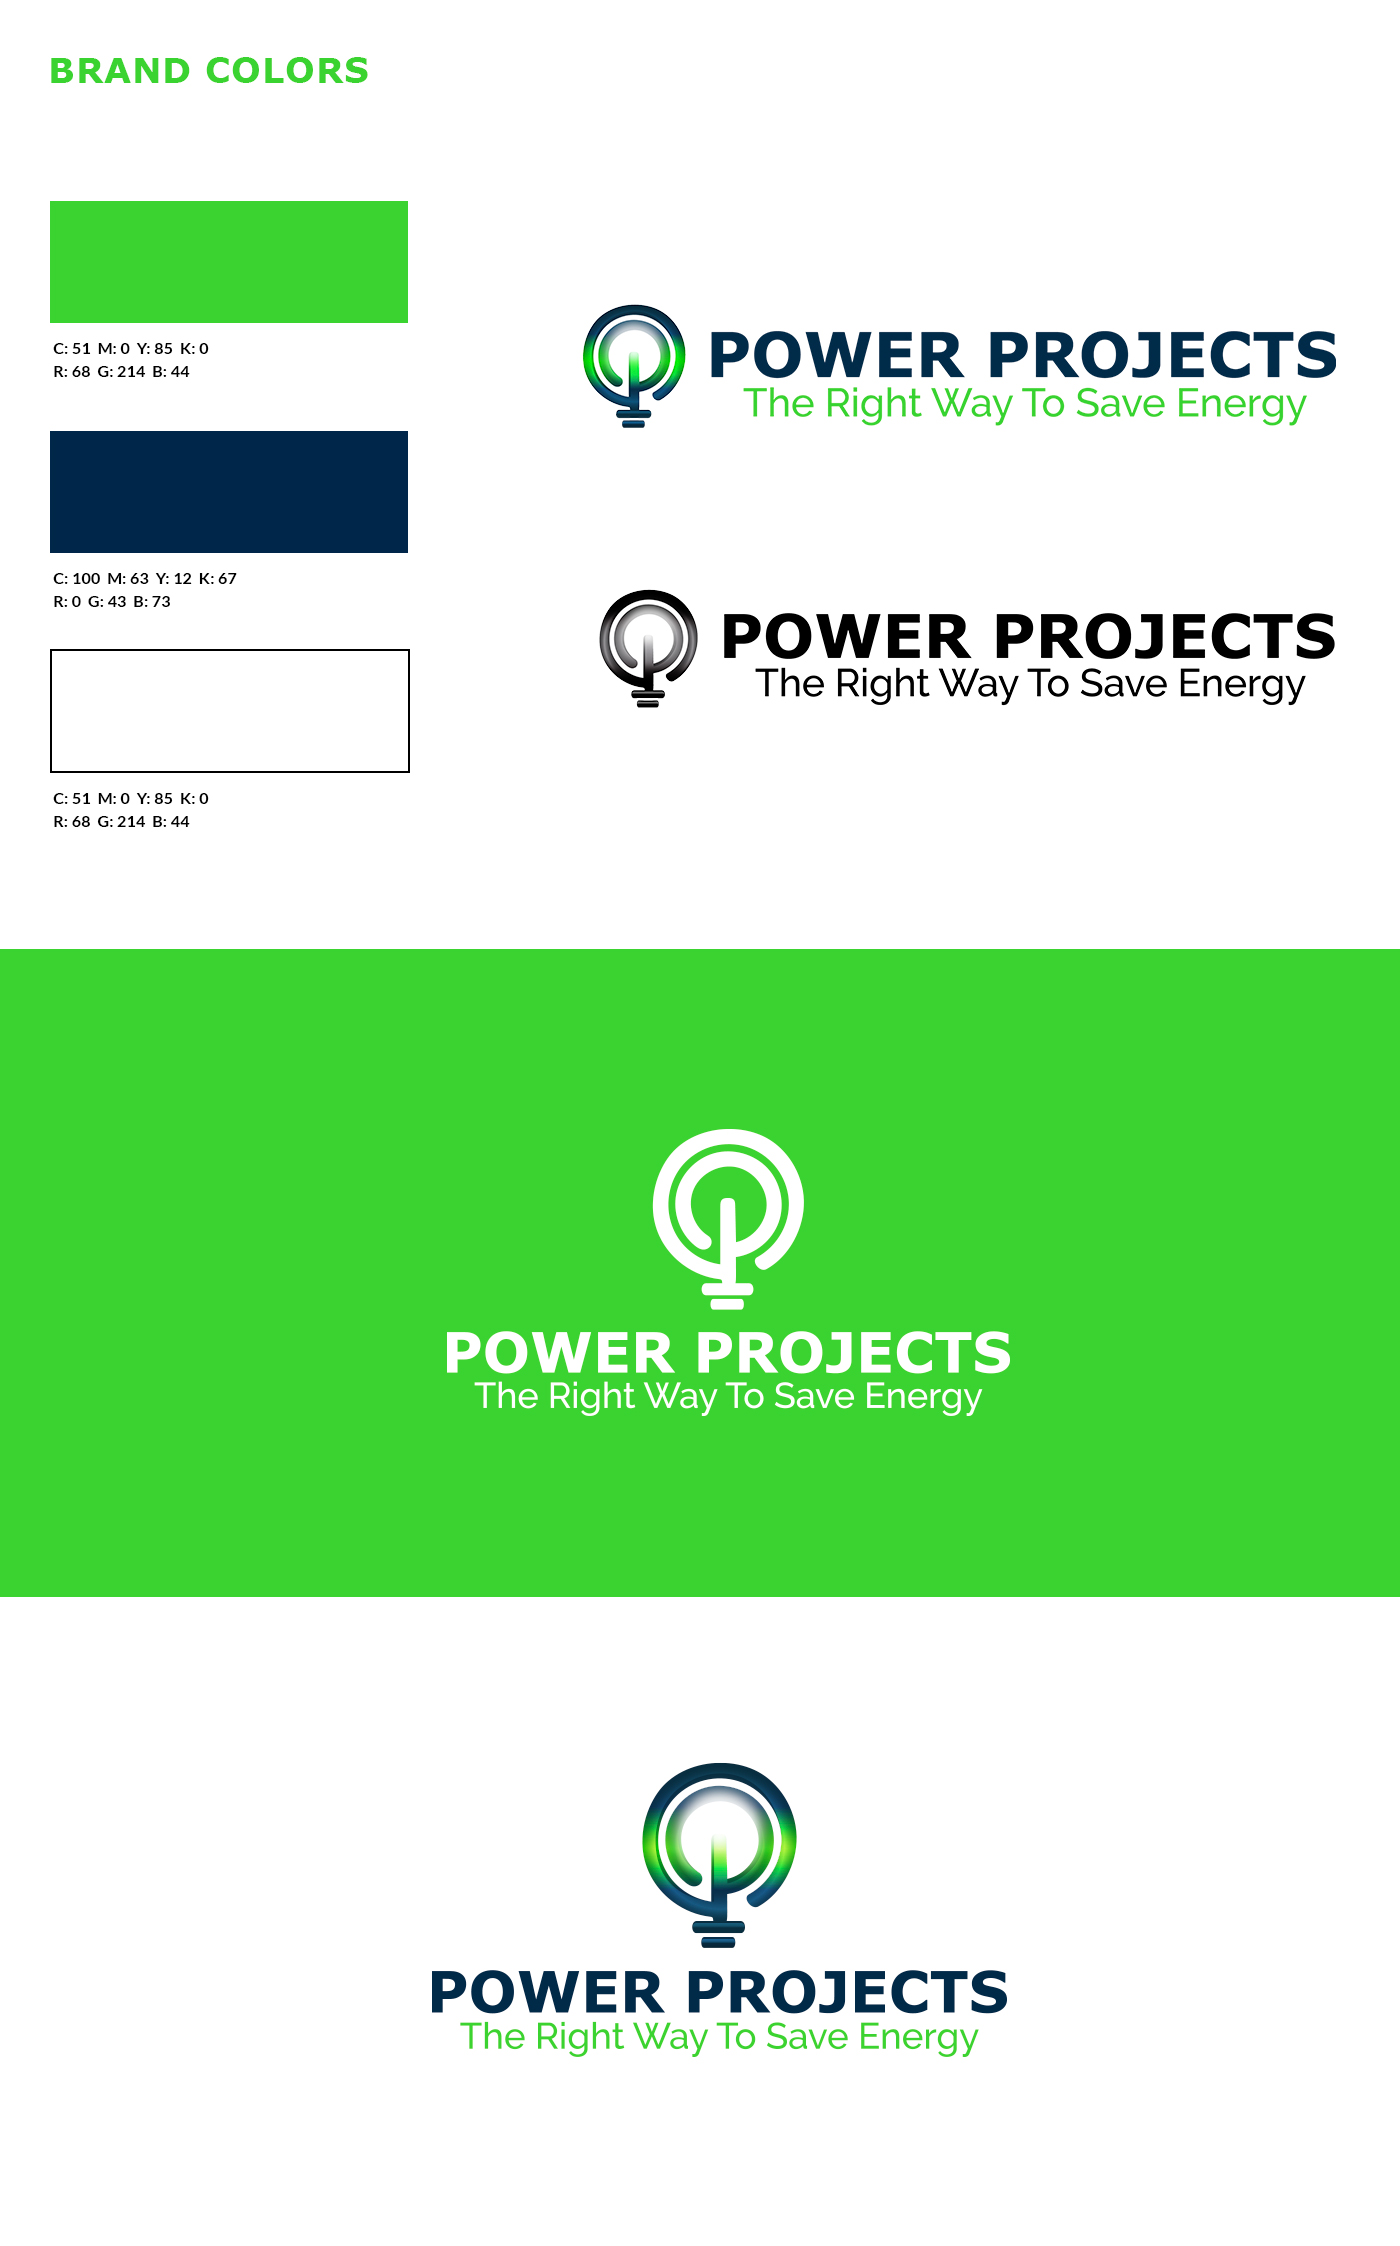 power_projects2.jpg